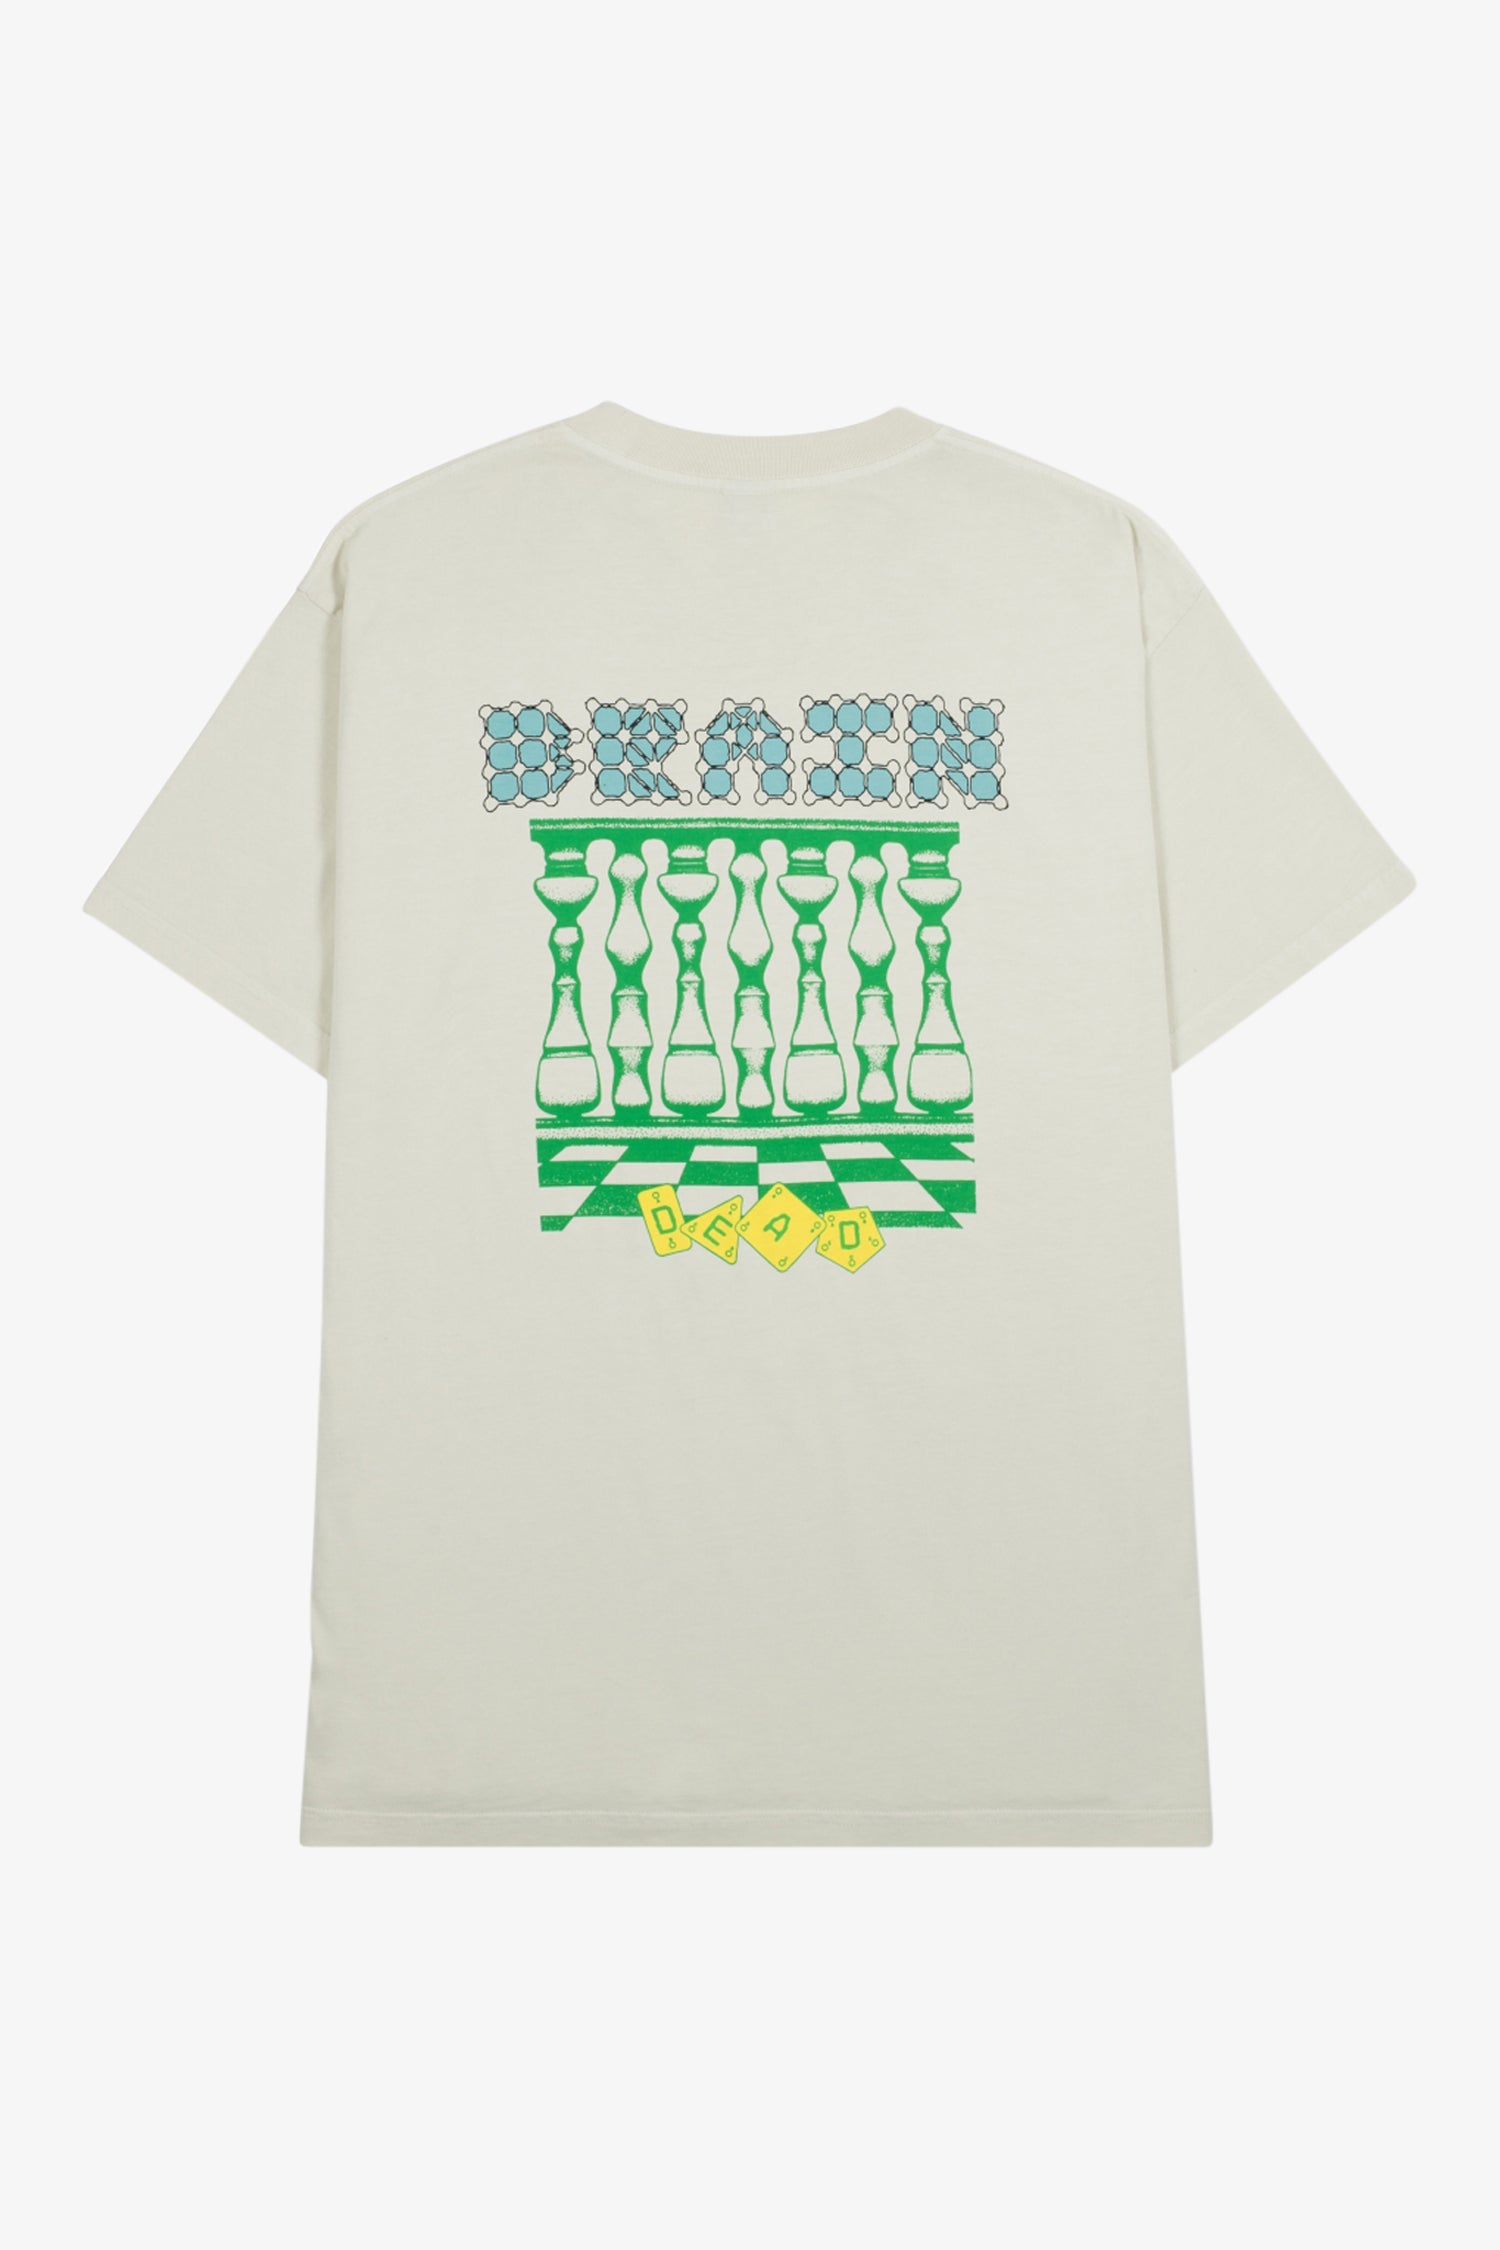 Selectshop FRAME - BRAIN DEAD Audio Science Tee T-Shirts Dubai